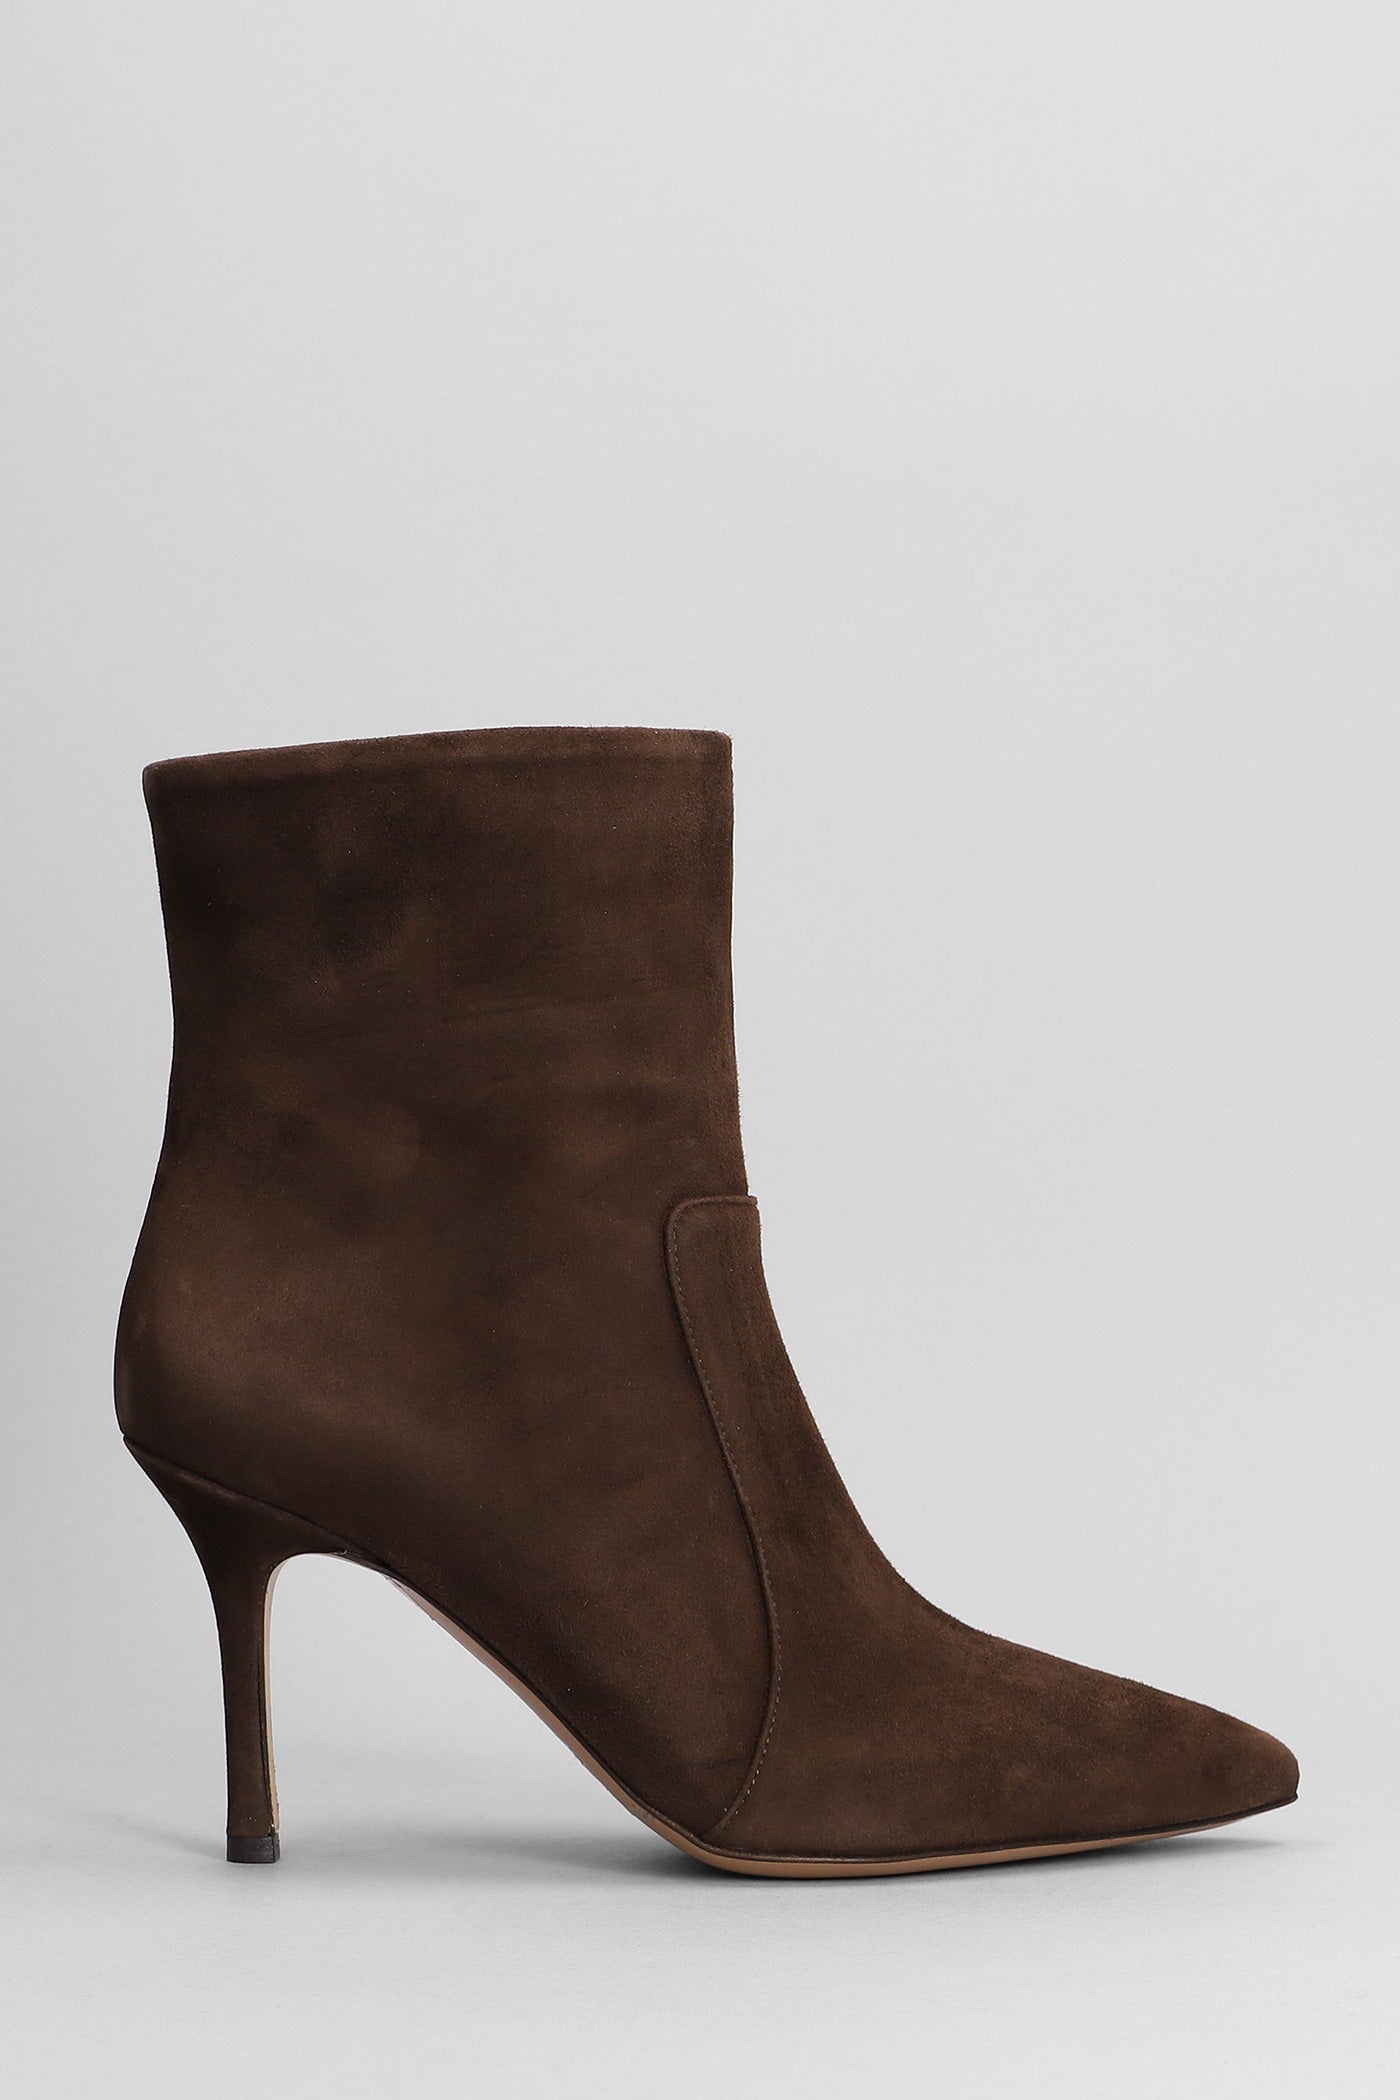 The Seller - High heels Ankle boots in dark brown suede